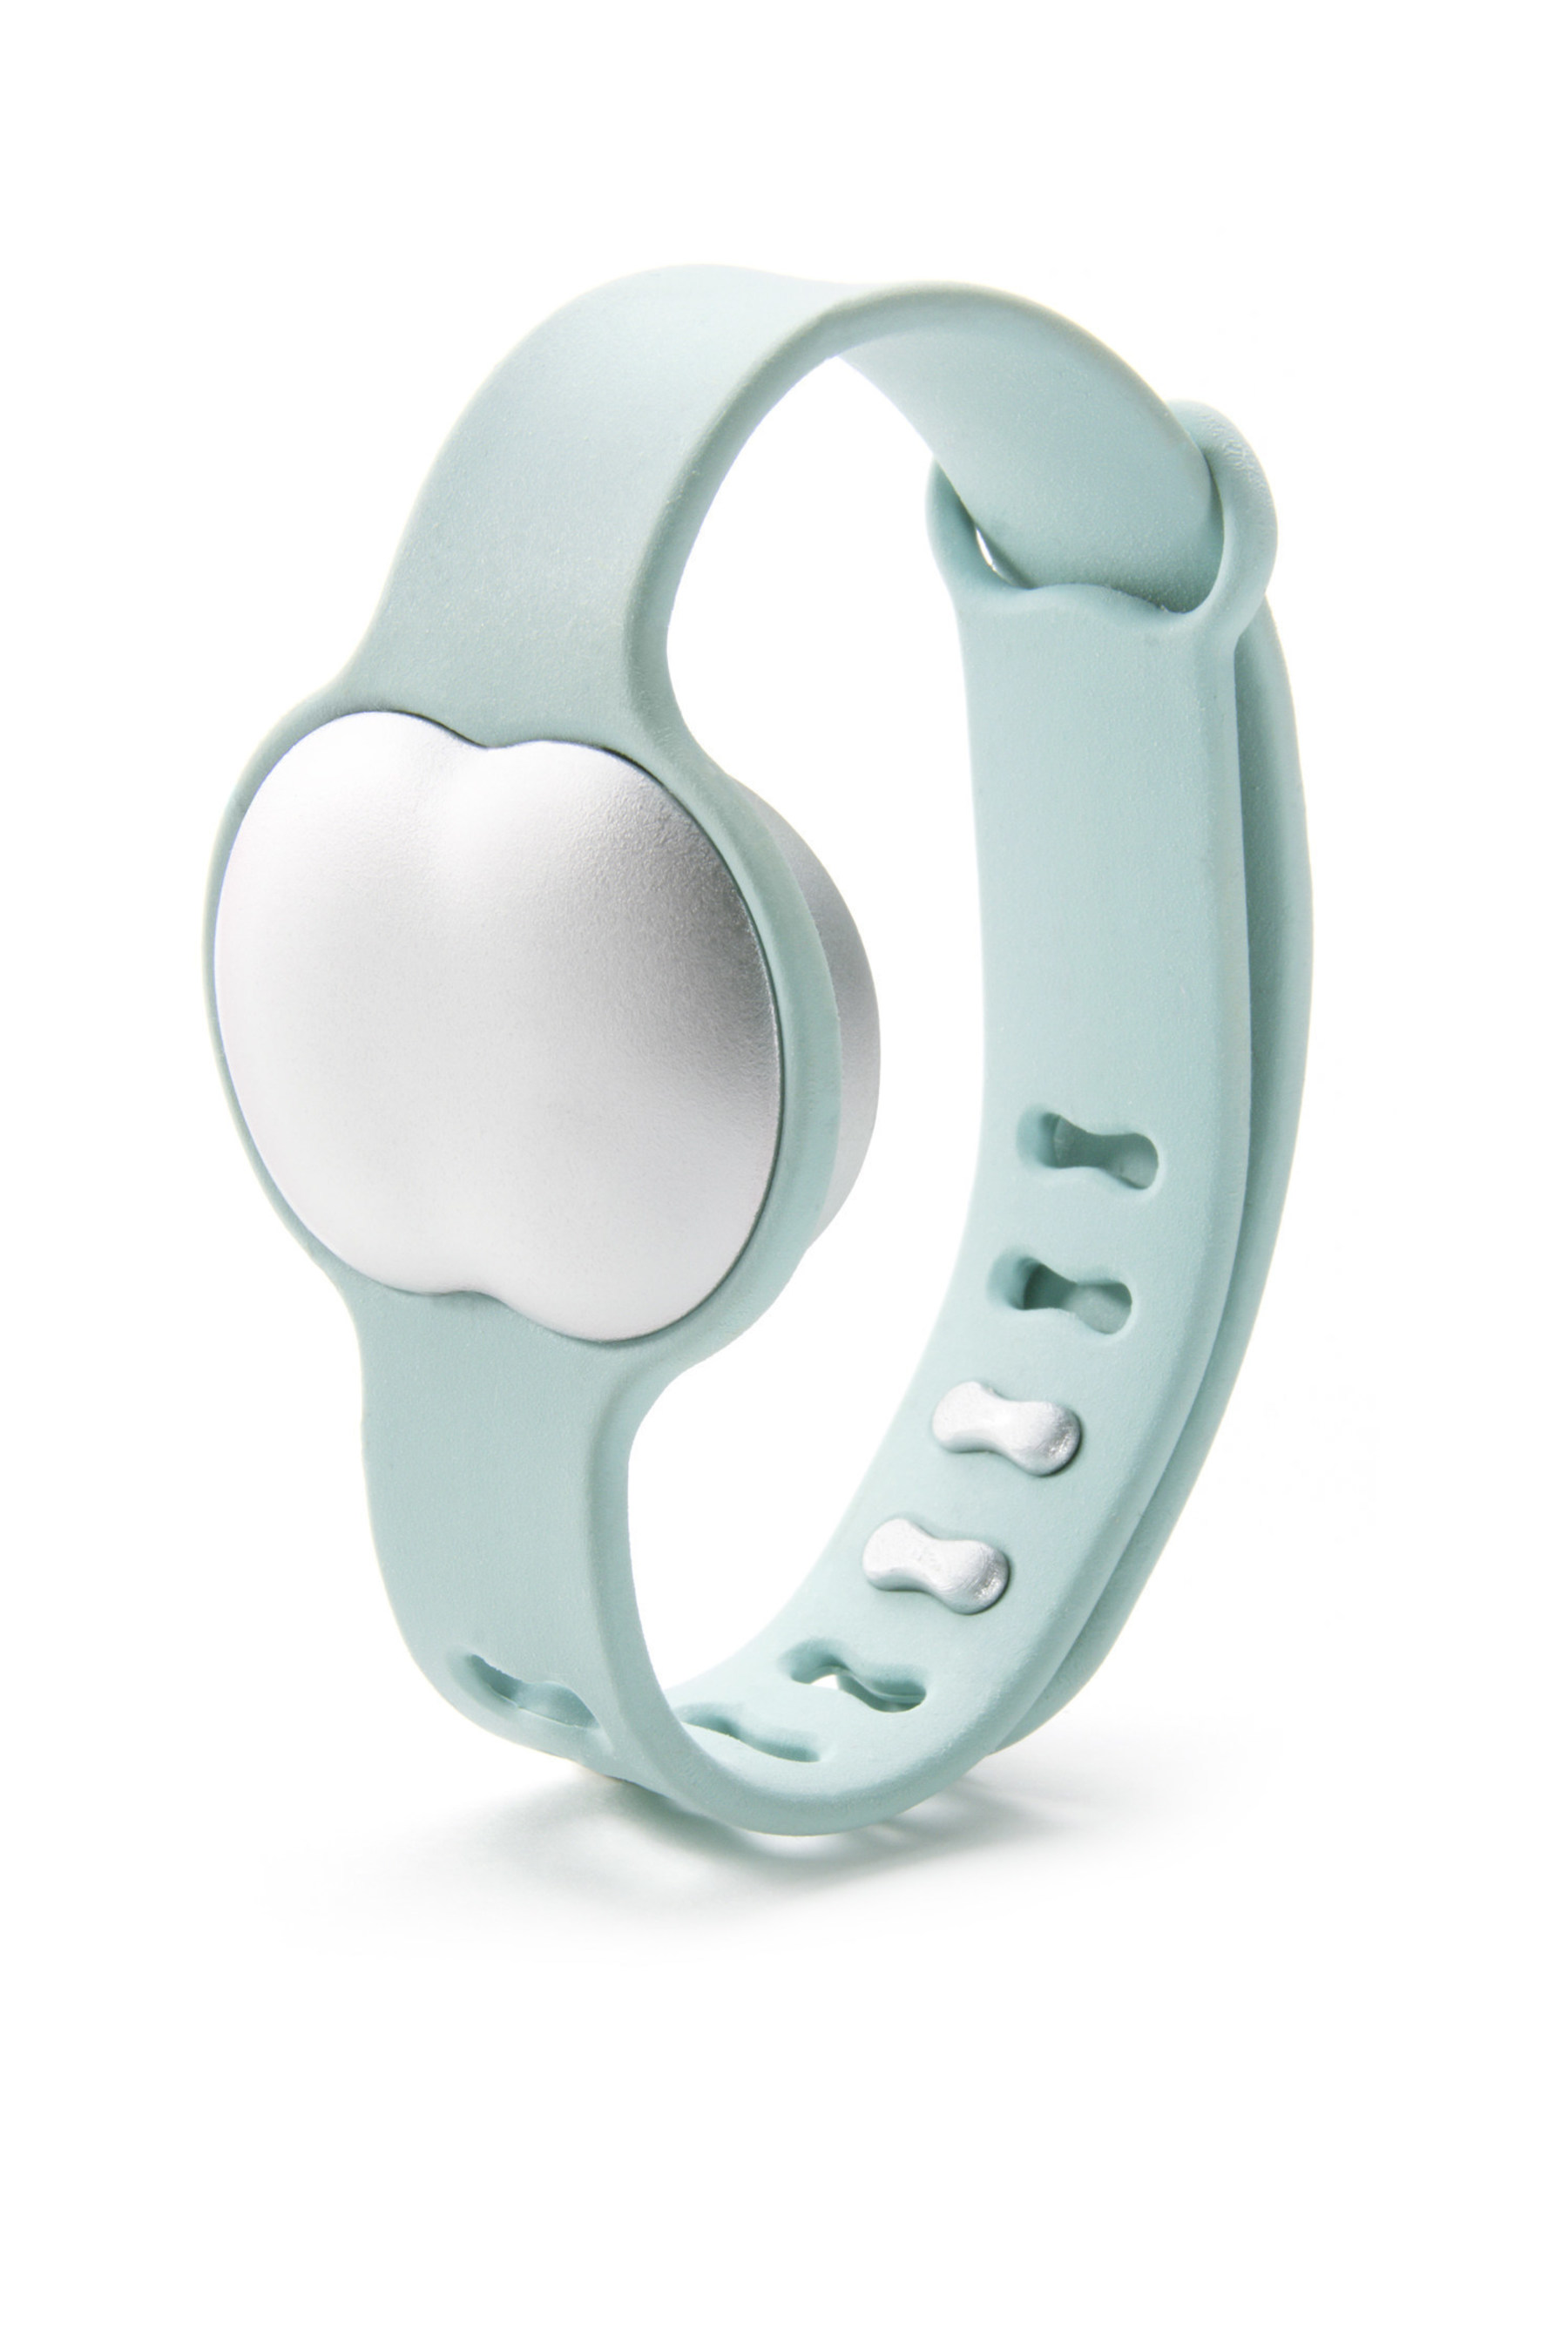 Ava fertility tracking sensor bracelet detects 5.3 fertile days in a woman's cycle